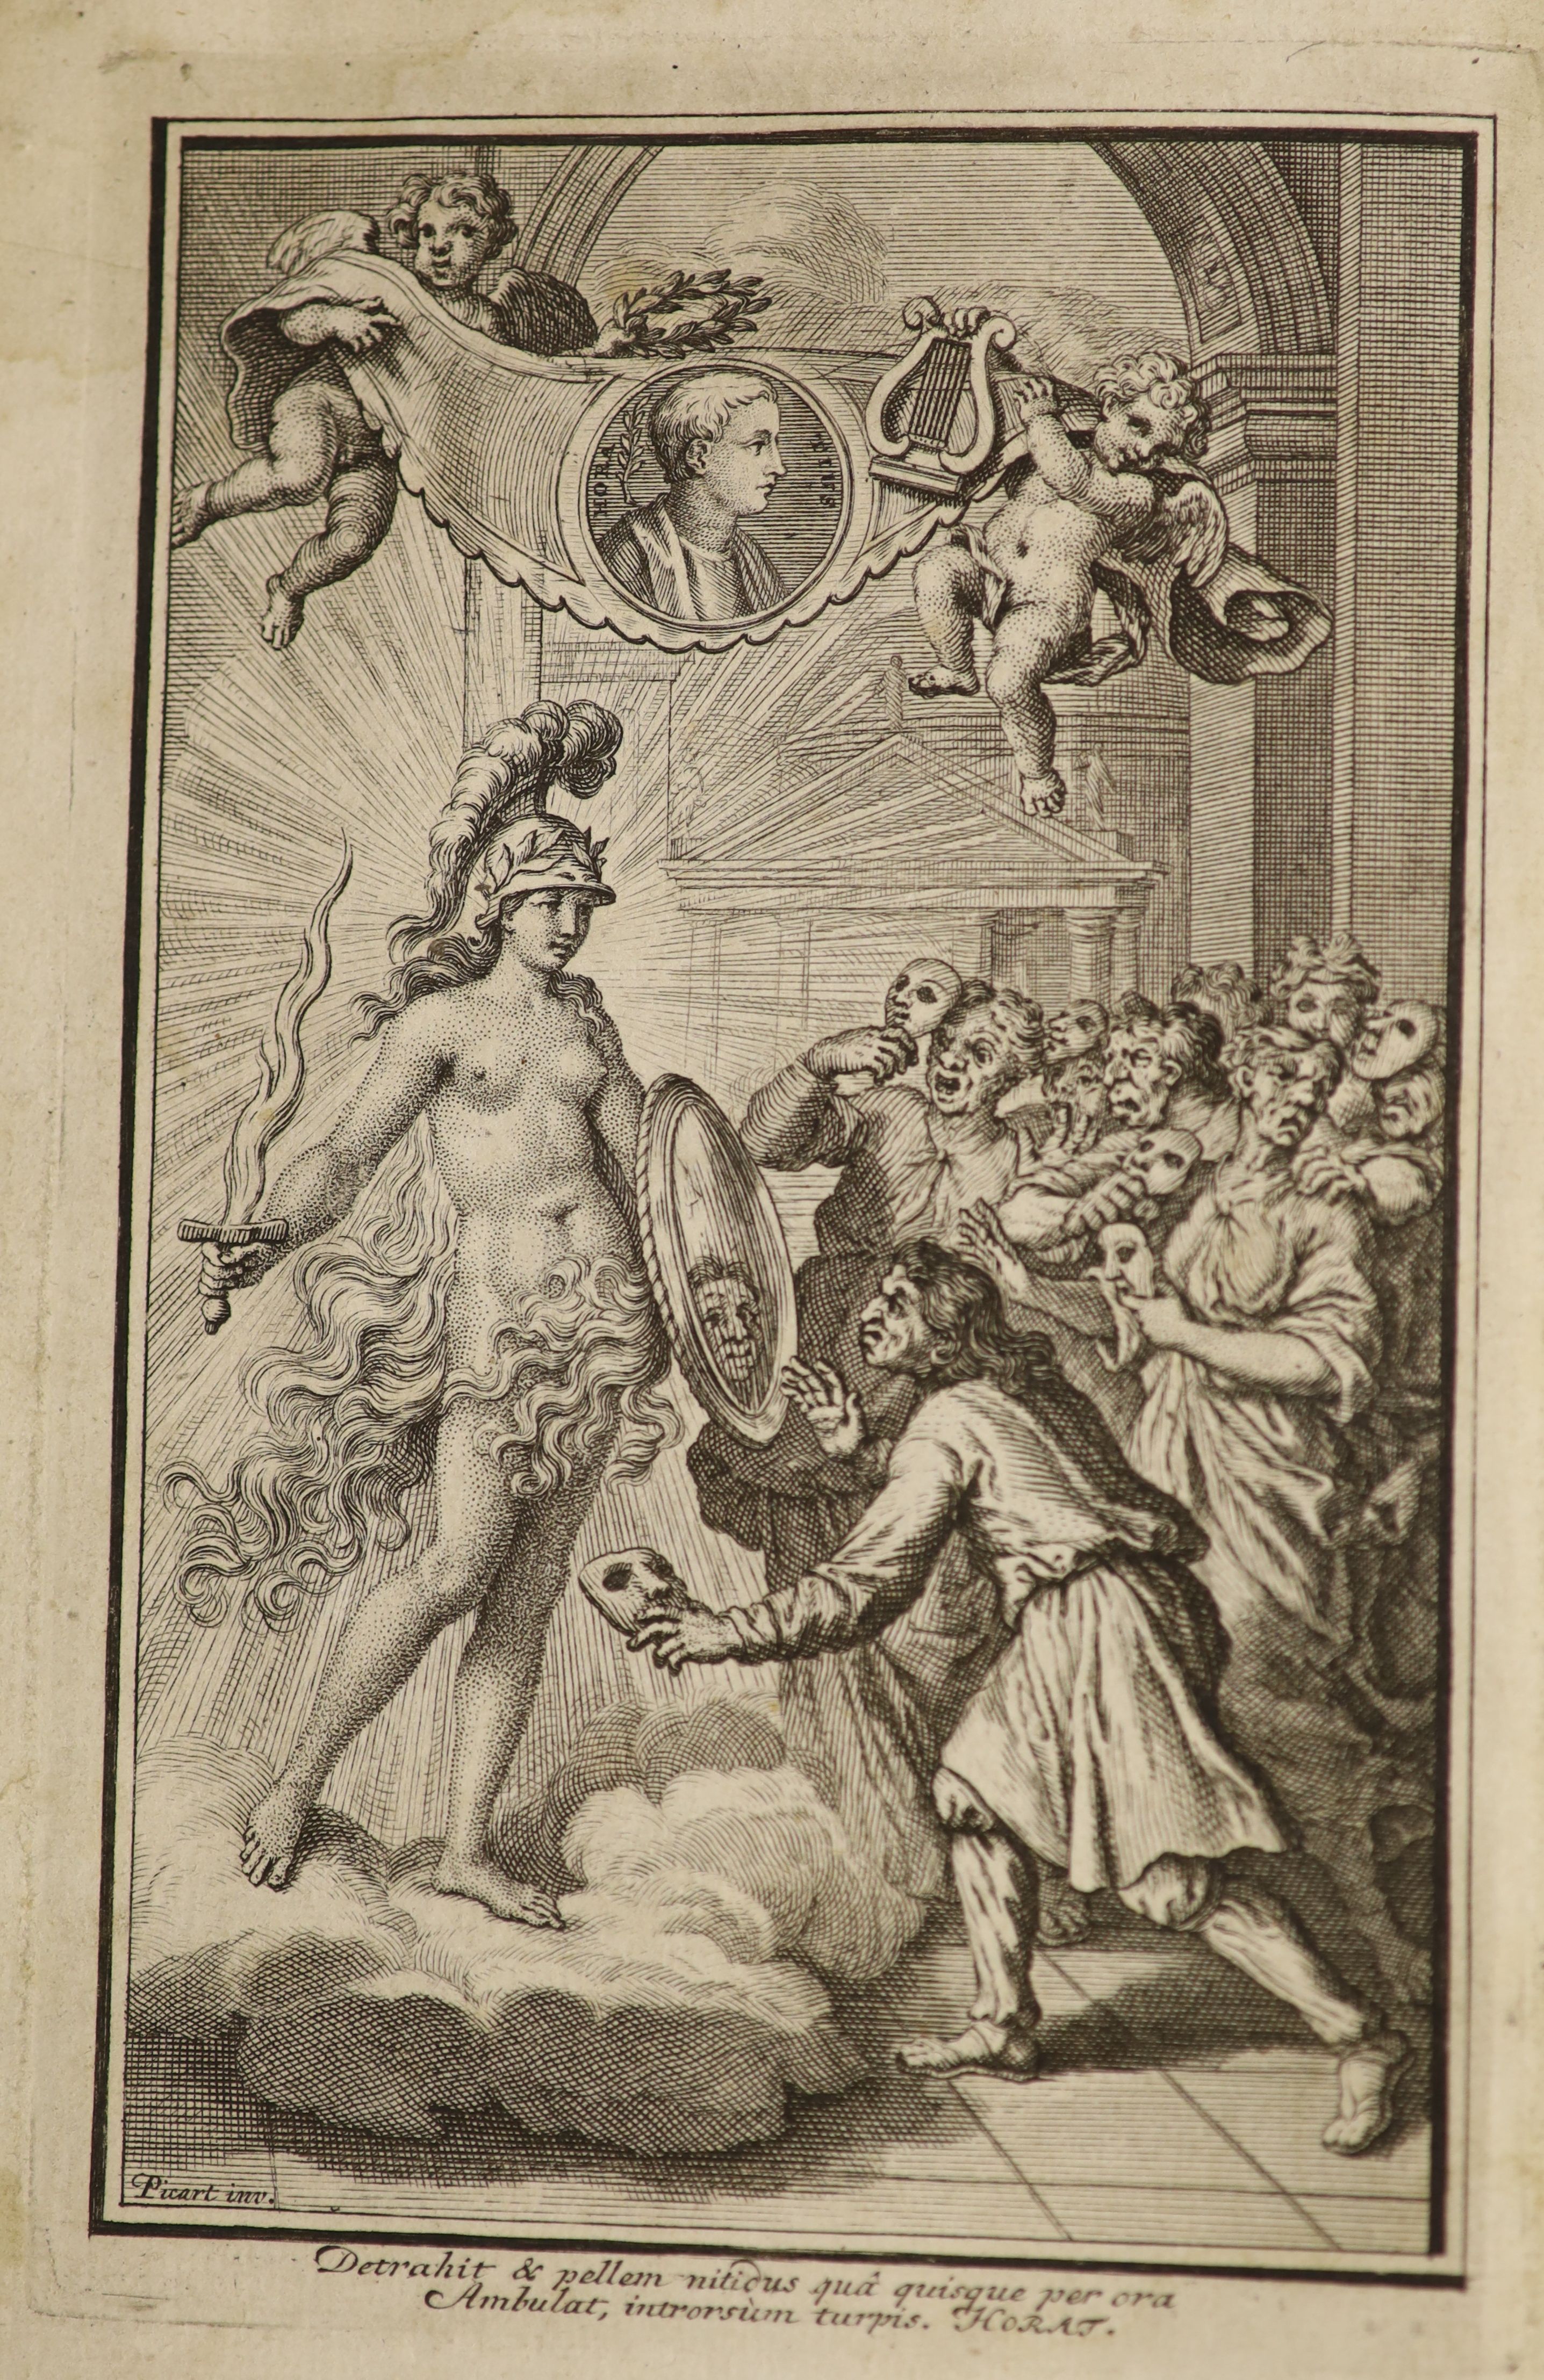 Cunningham, Alexander (editor) - Q. Horatii Flacci Poemata, vol 1, (of 2), 8vo, half calf, engraved frontispiece, Thomam Jonsonium, Hagar Comitum, 1721